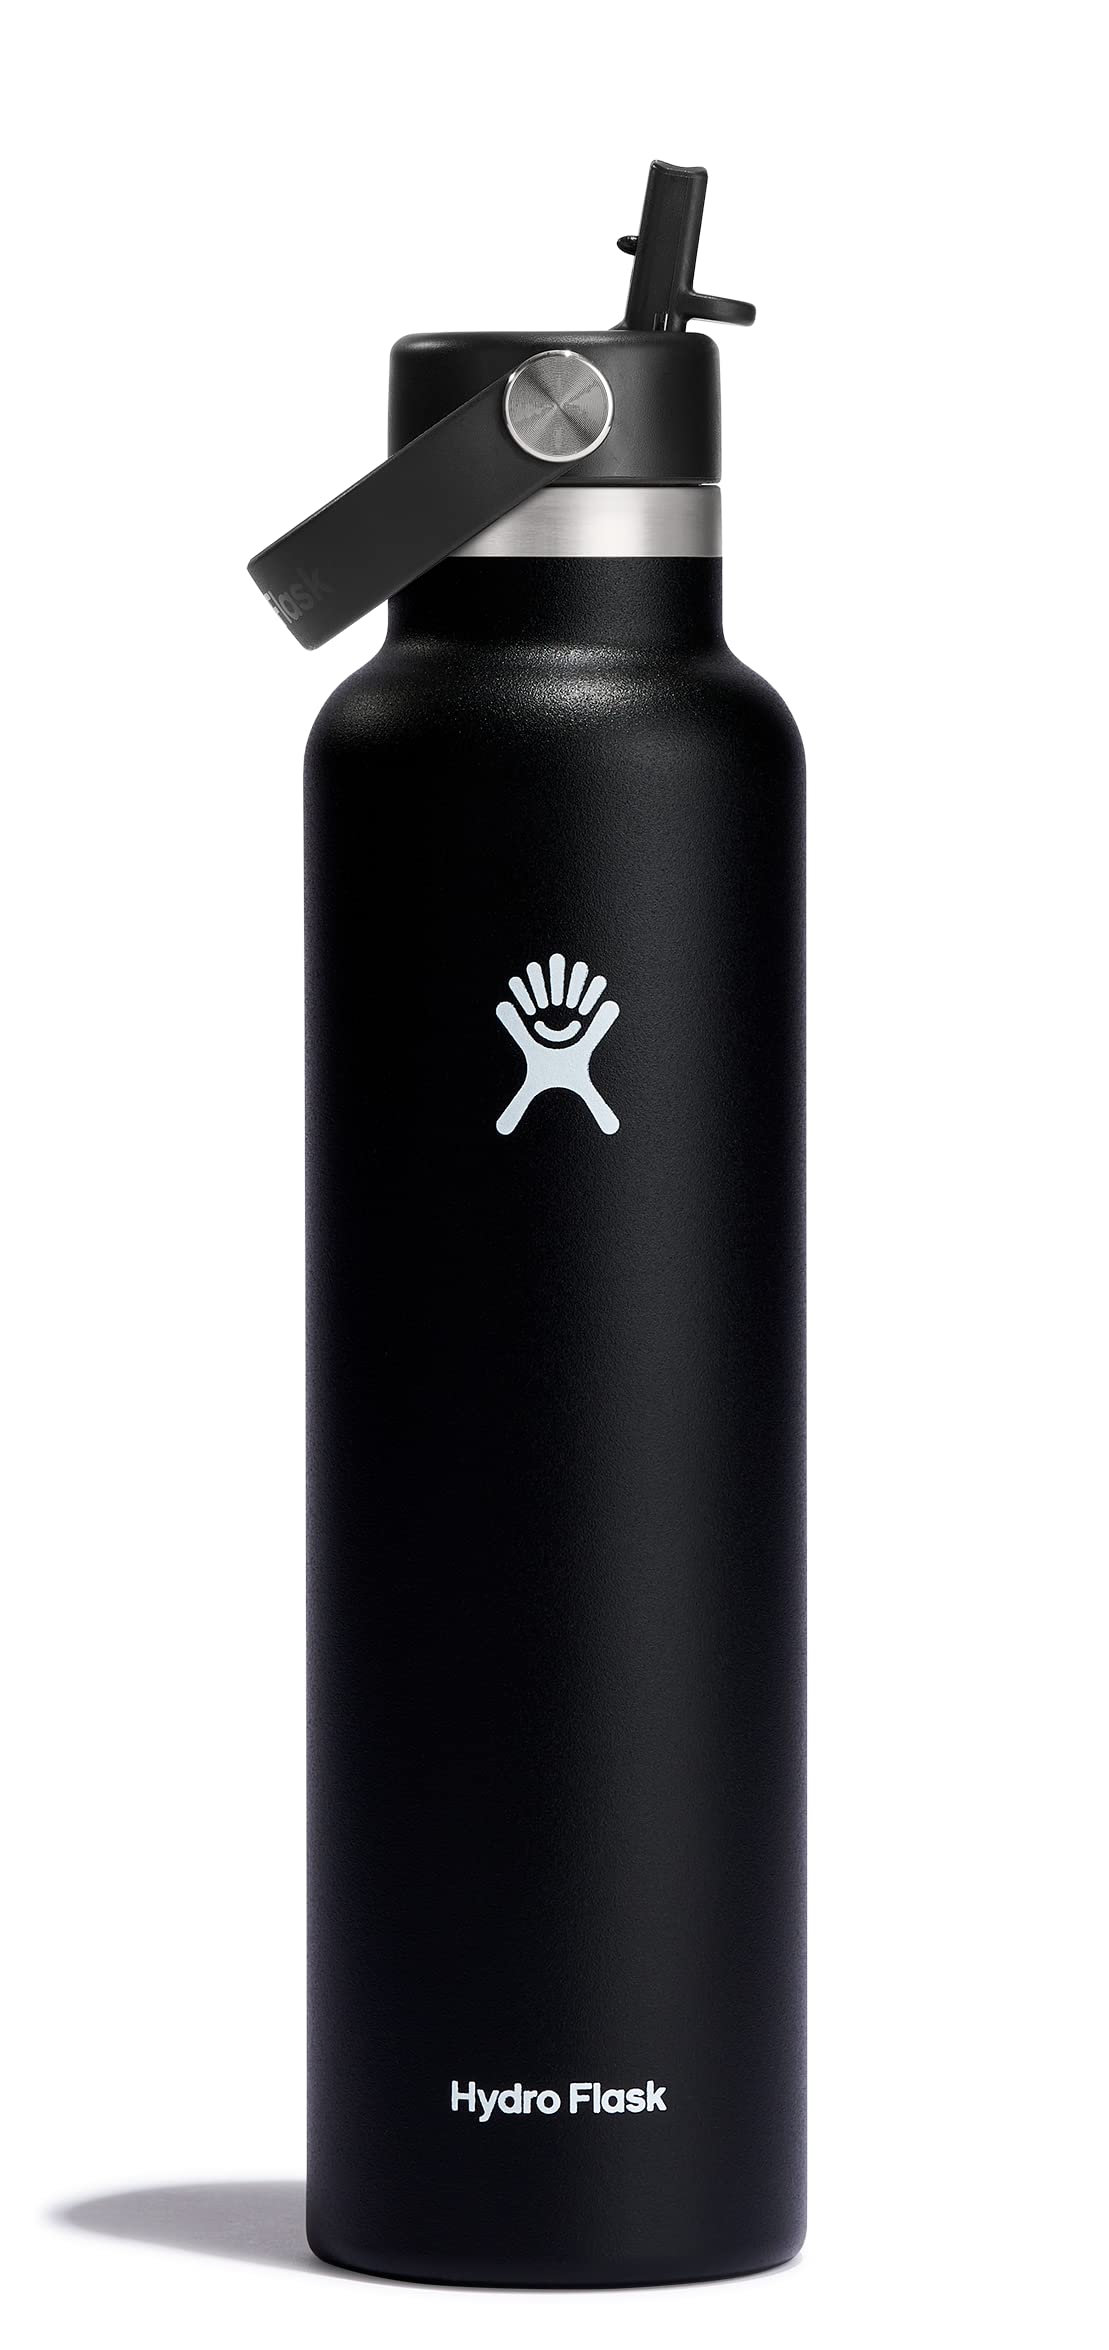 24-Oz Hydro Flask Standard Mouth w/ Flex Straw Cap (Black) $19.52 + Free Shipping w/ Prime or on orders $35+